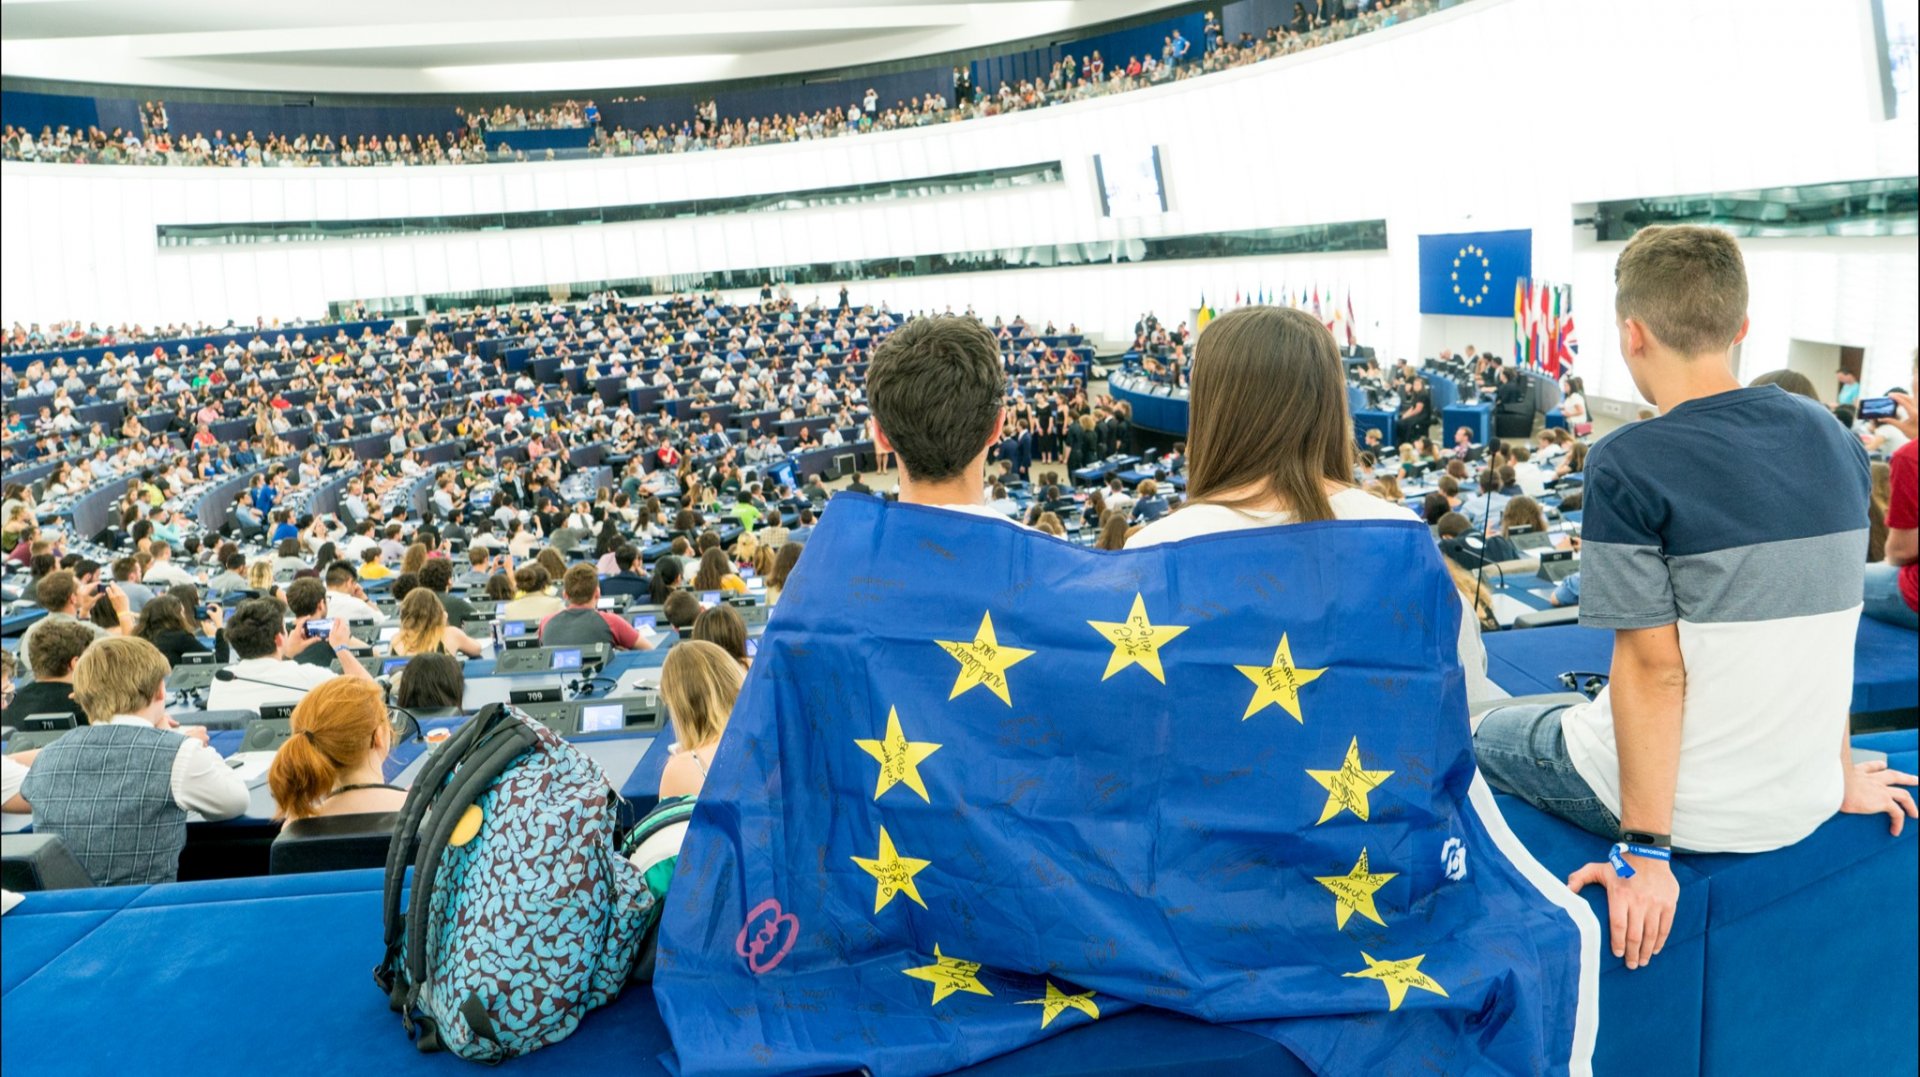 parlament european UE EU Europa europarlamentar Moldova e UE